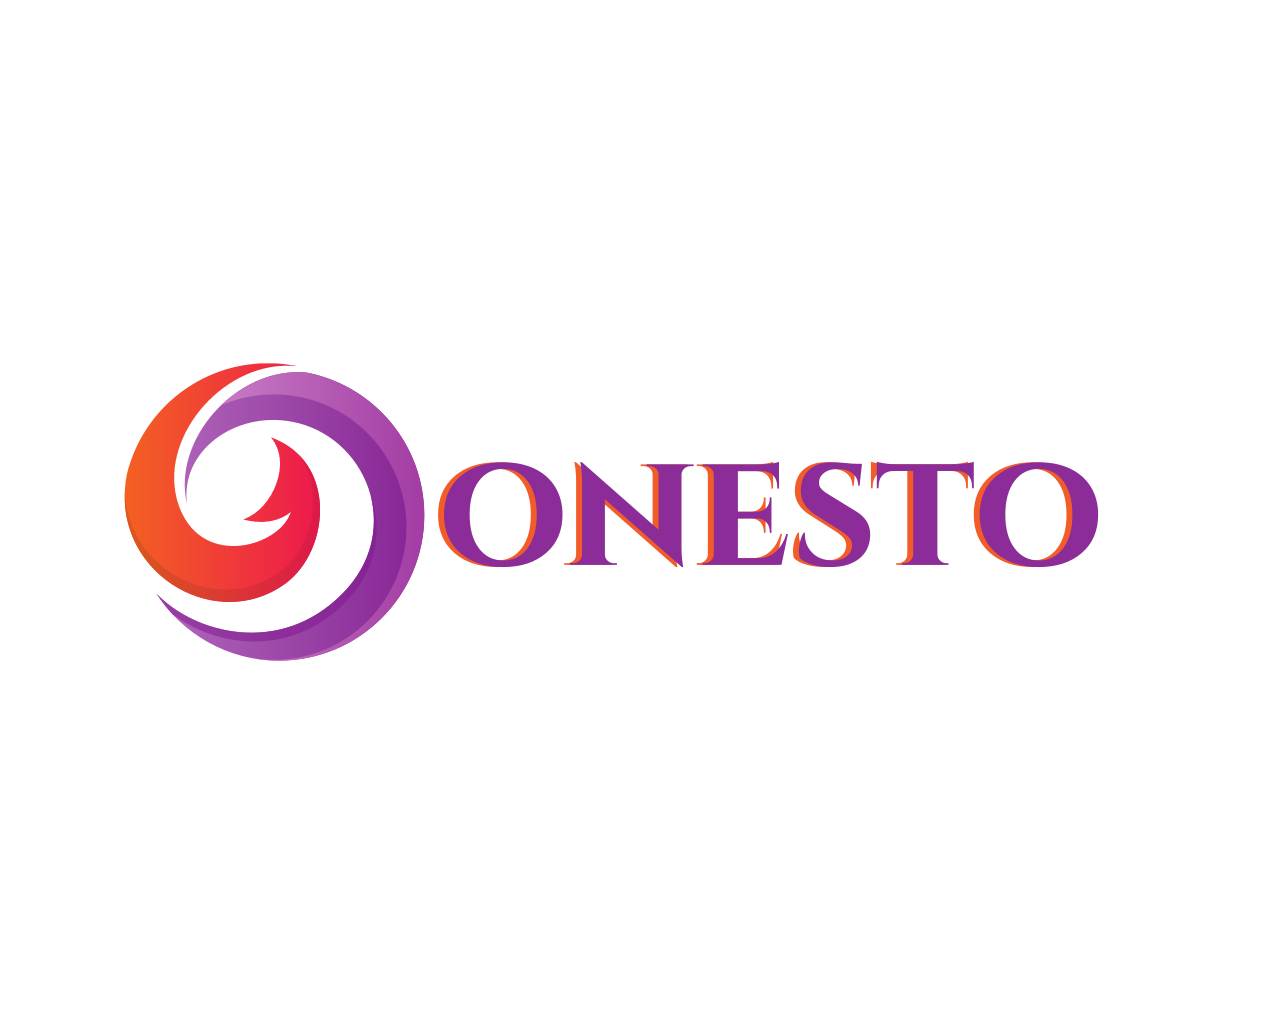 Onesto_Ltd_Şti